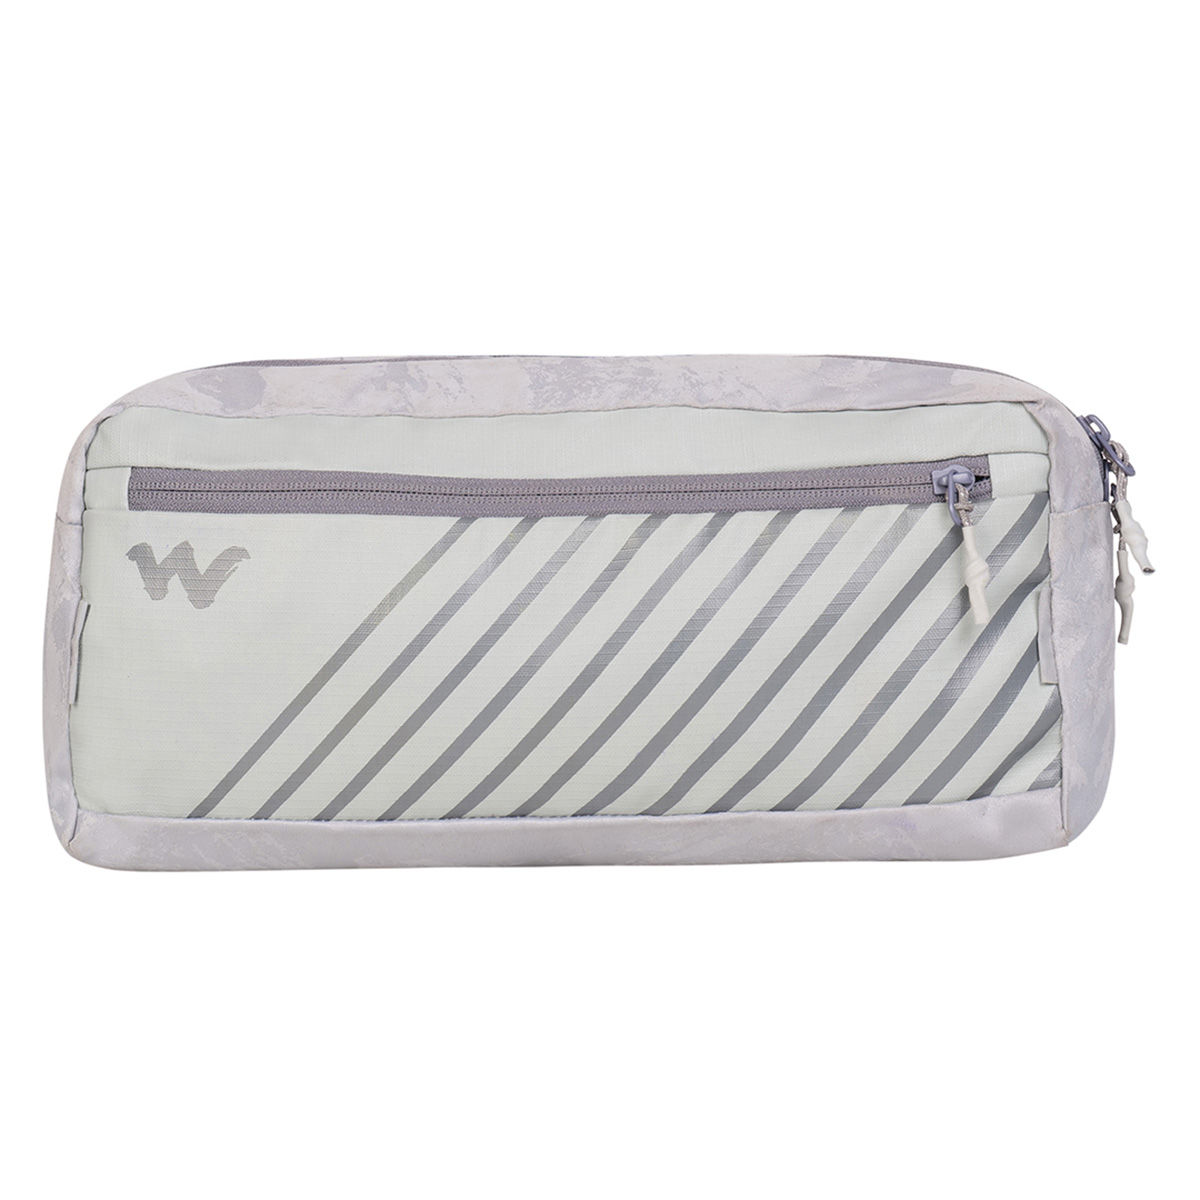 Buy Wildcraft Bags & Handbags online - Men - 62 products | FASHIOLA.in